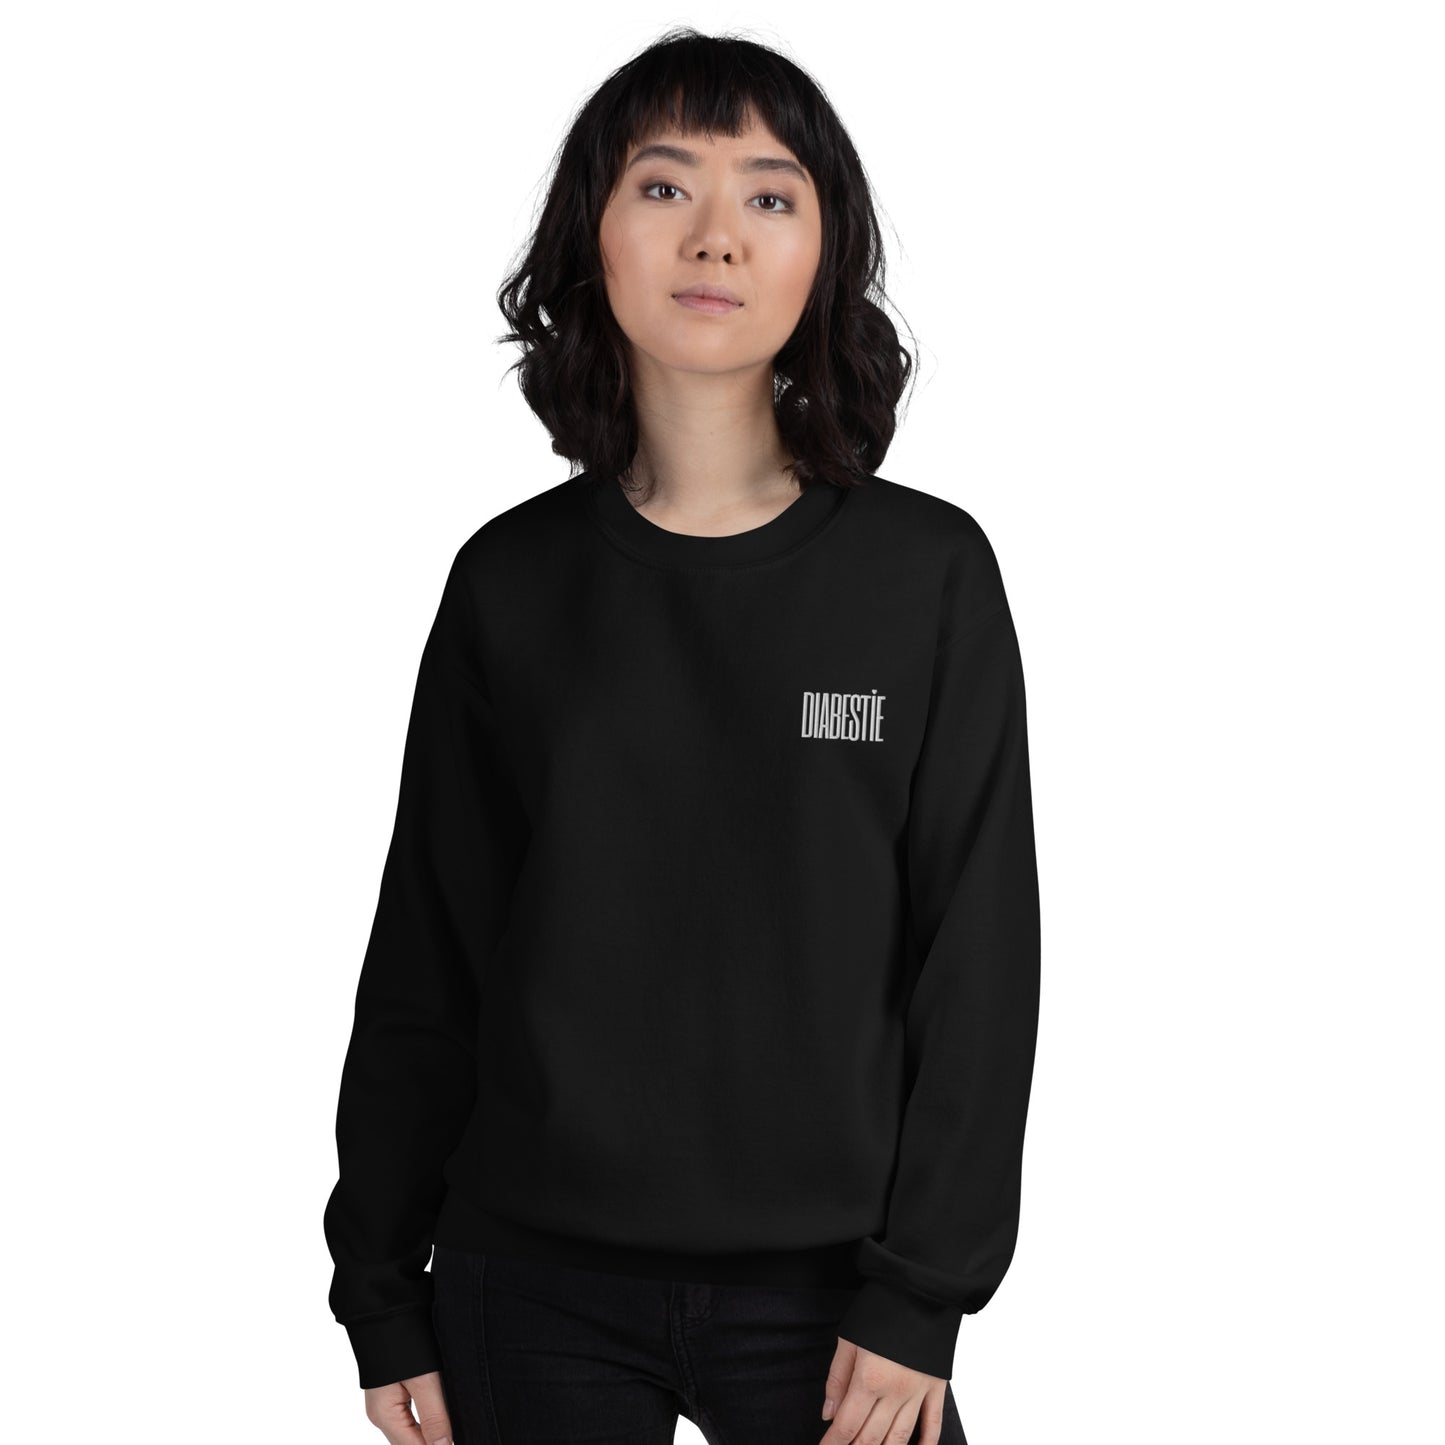 black unisex sweater 'diabestie'